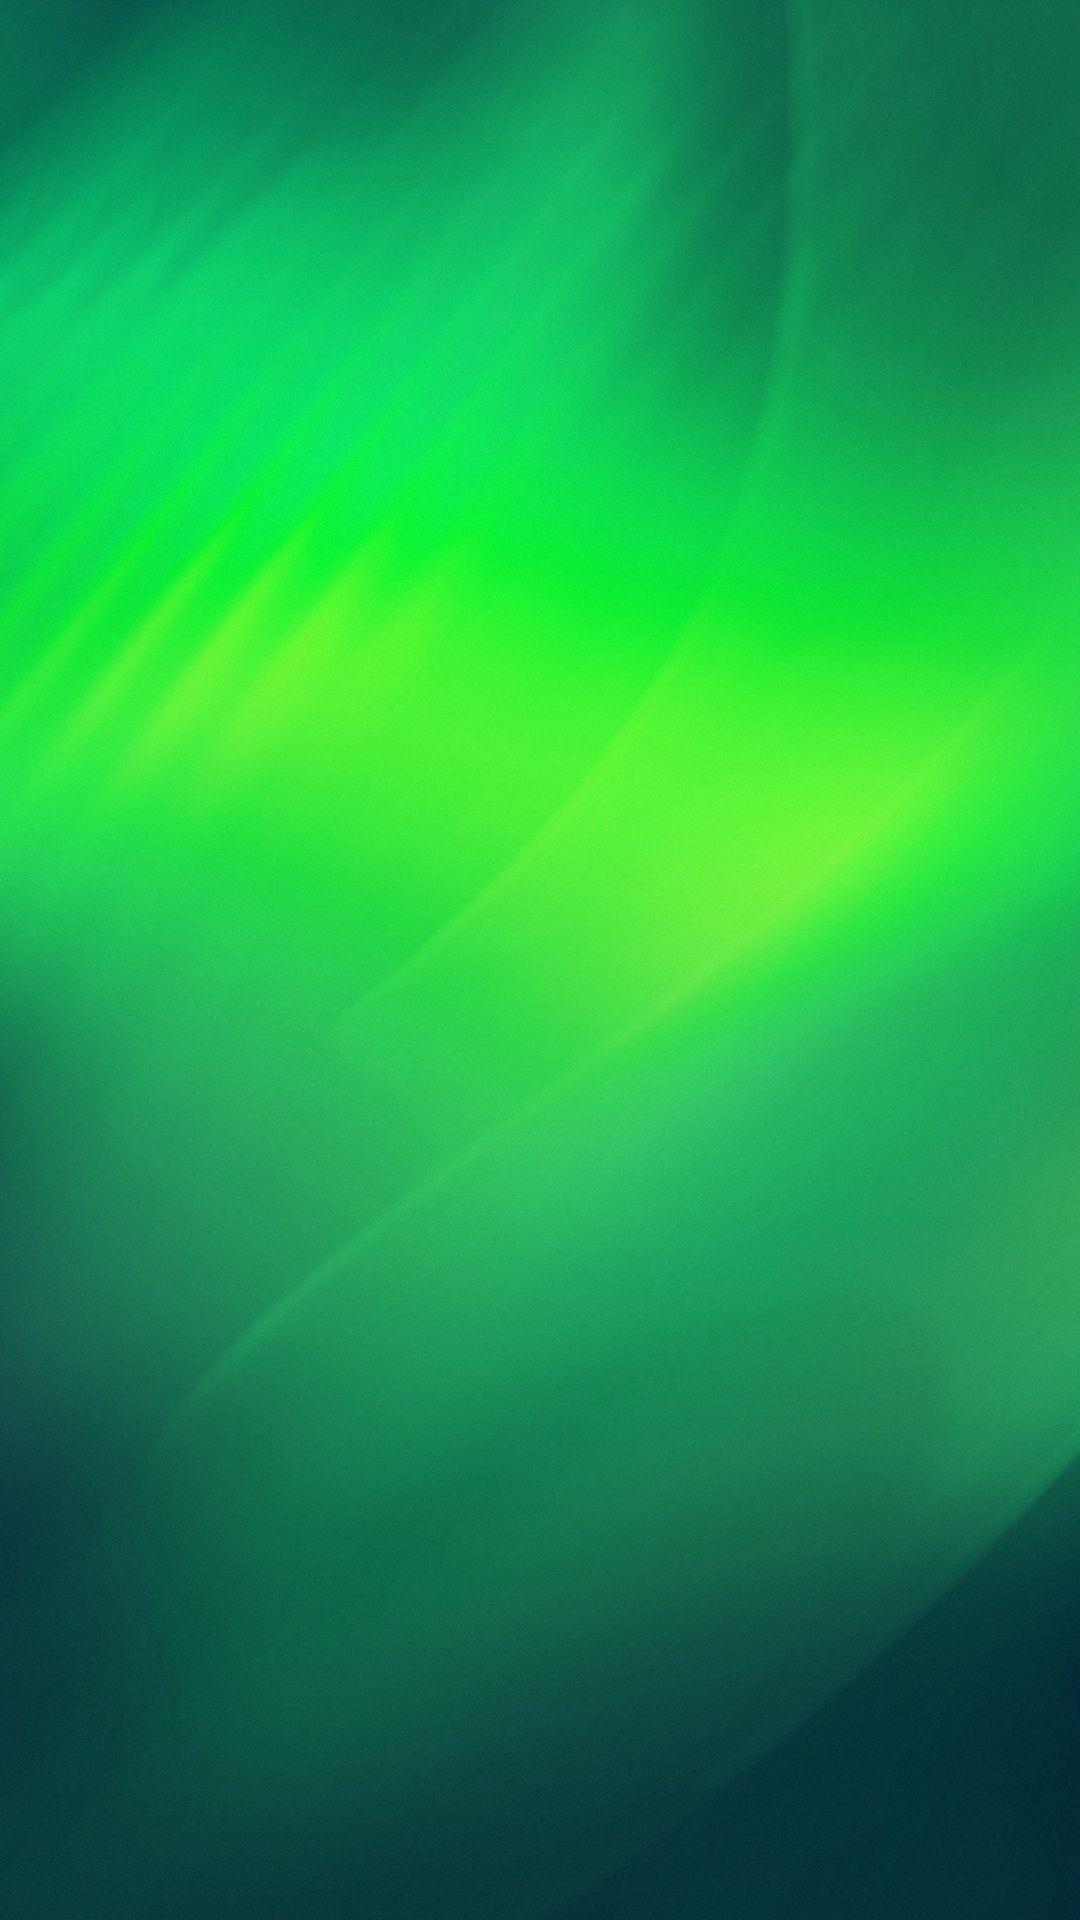 Abstract Green Light Pattern IPhone 6 Wallpaper Download. IPhone Wallpaper, IPad Wallpaper One St. Phone Wallpaper Image, IPhone 5s Wallpaper, Green Wallpaper